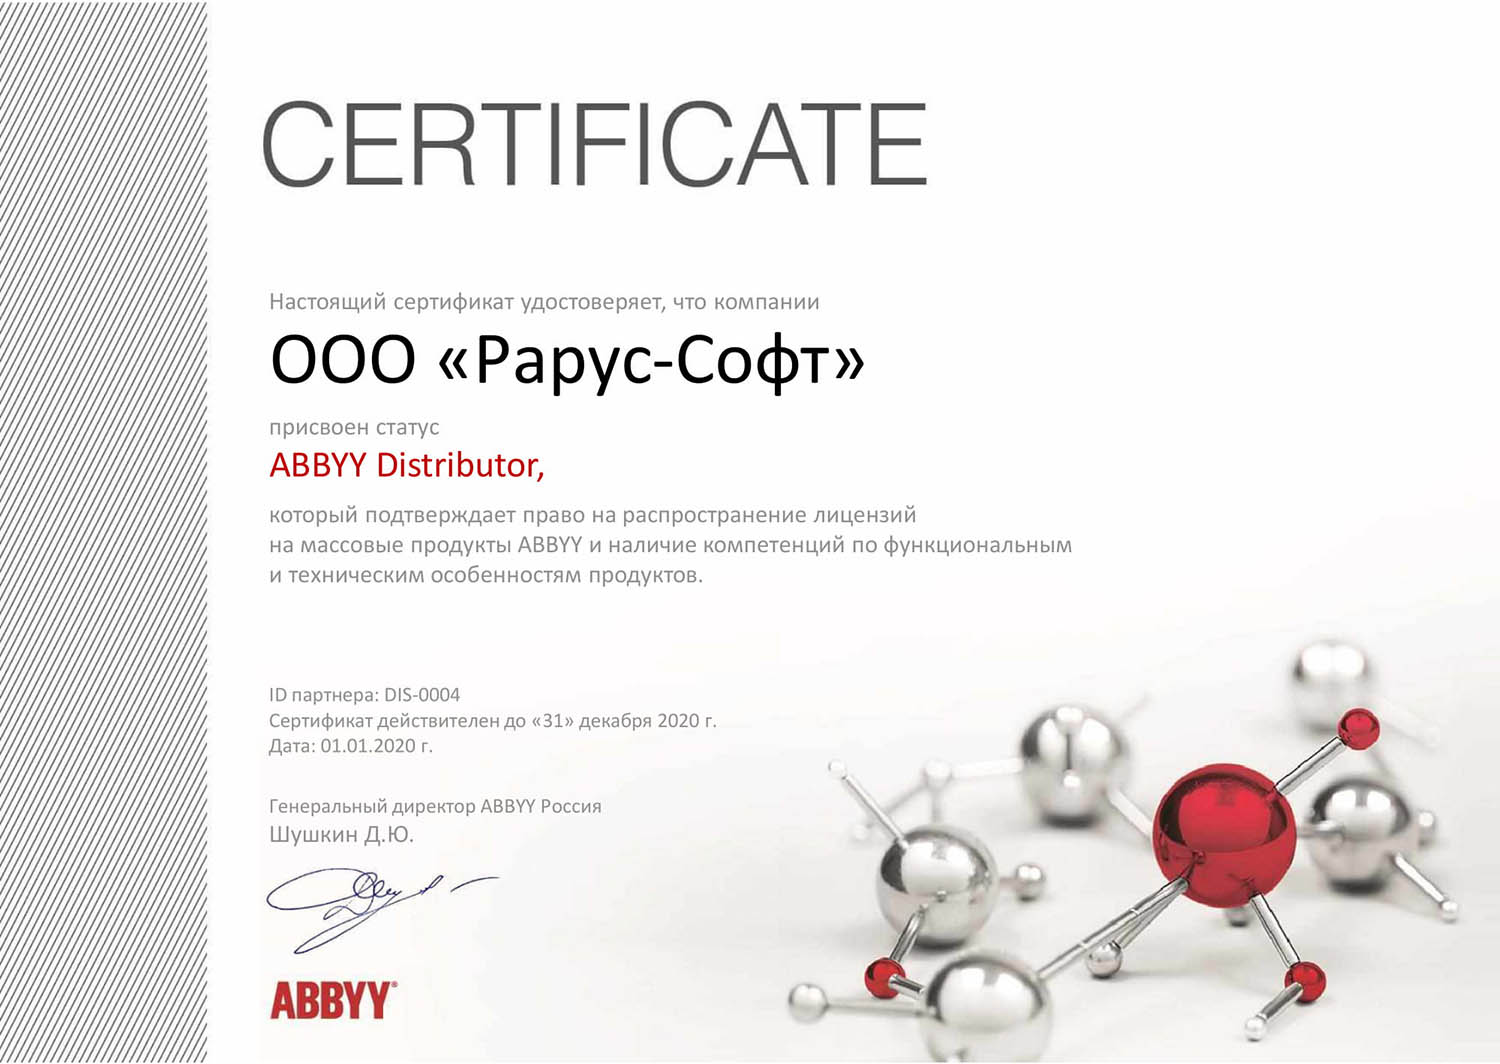 Сертификат о присвоении статуса ABBYY Distributor 2020